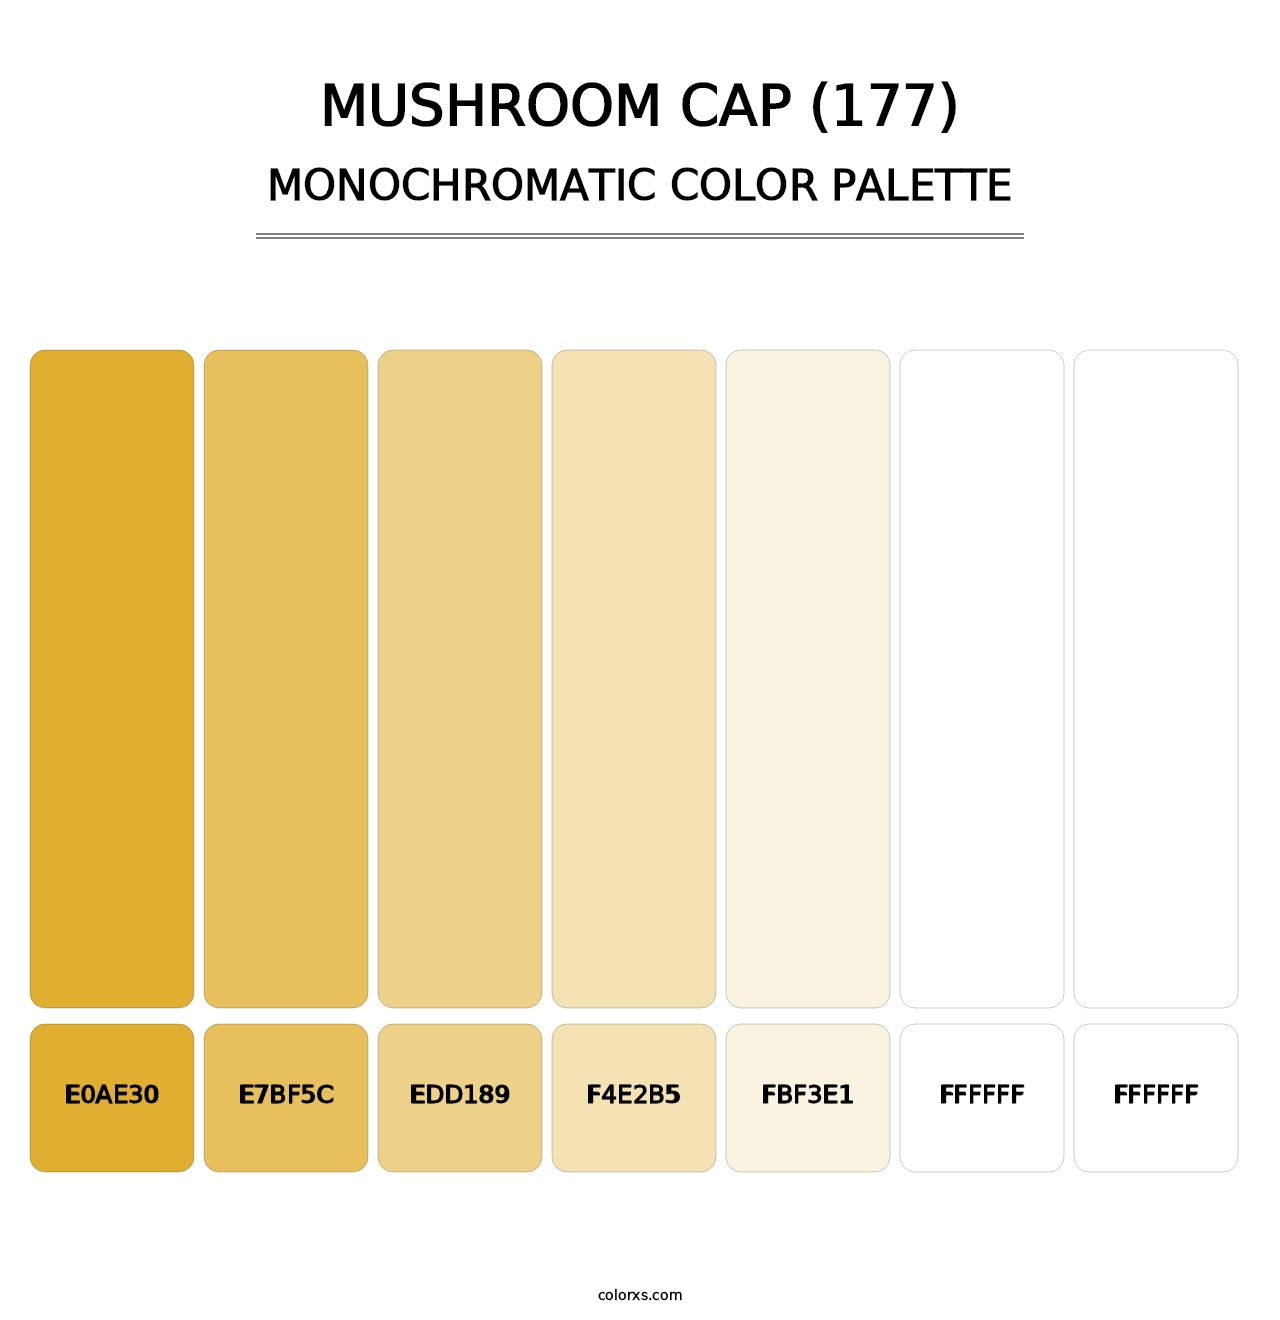 Mushroom Cap (177) - Monochromatic Color Palette